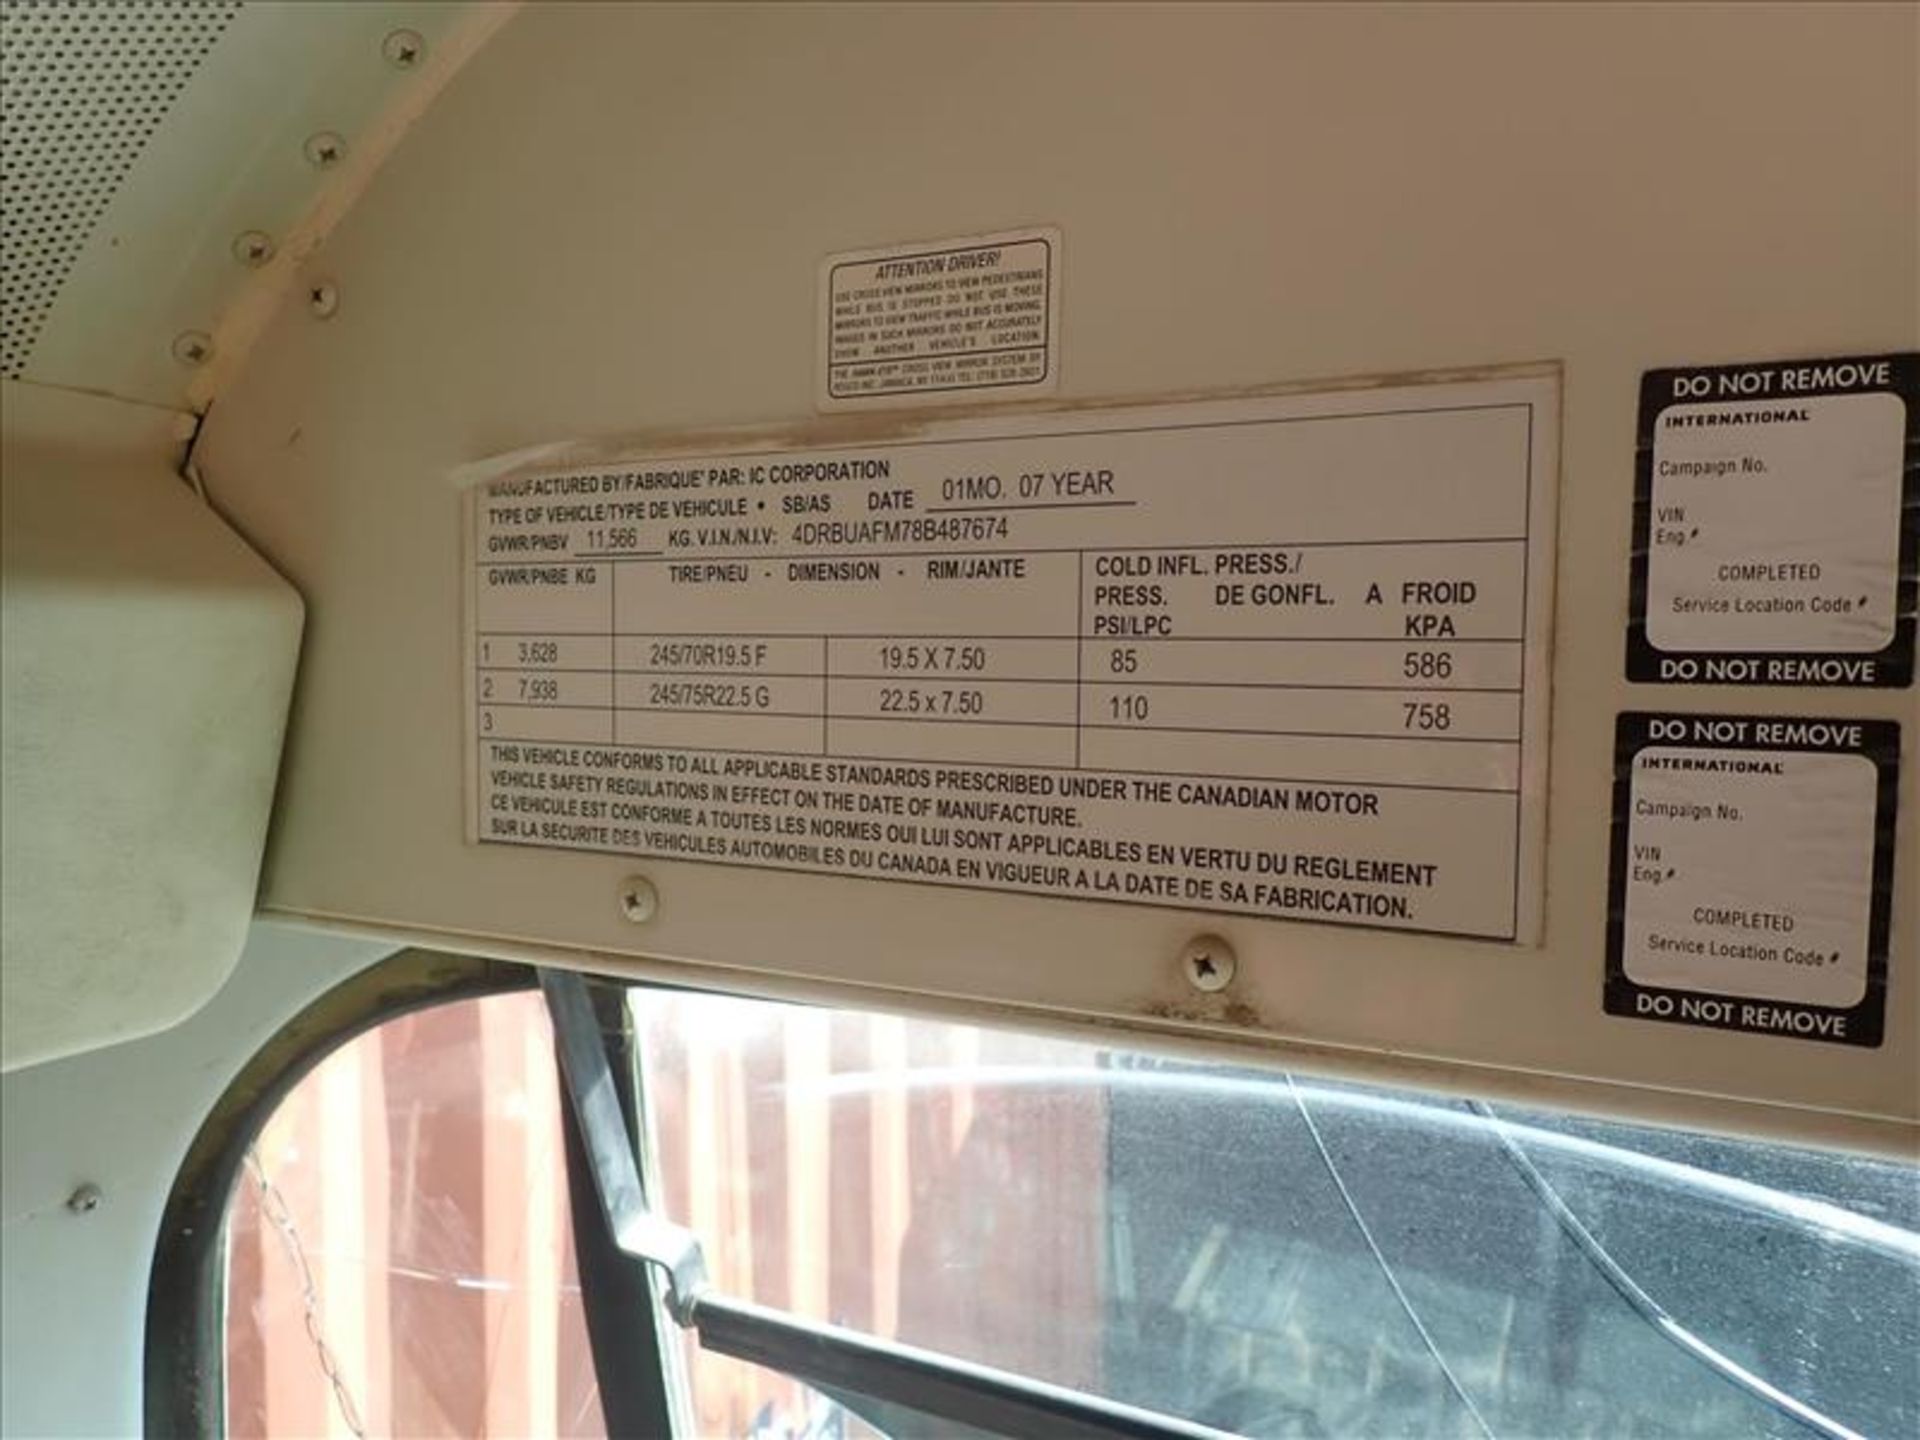 IC Corp. School Bus (DMG), VIN 4DRBUAFM78B487674 (2007), 36-passenger (Tag No. 4925) [Sea - Image 2 of 5